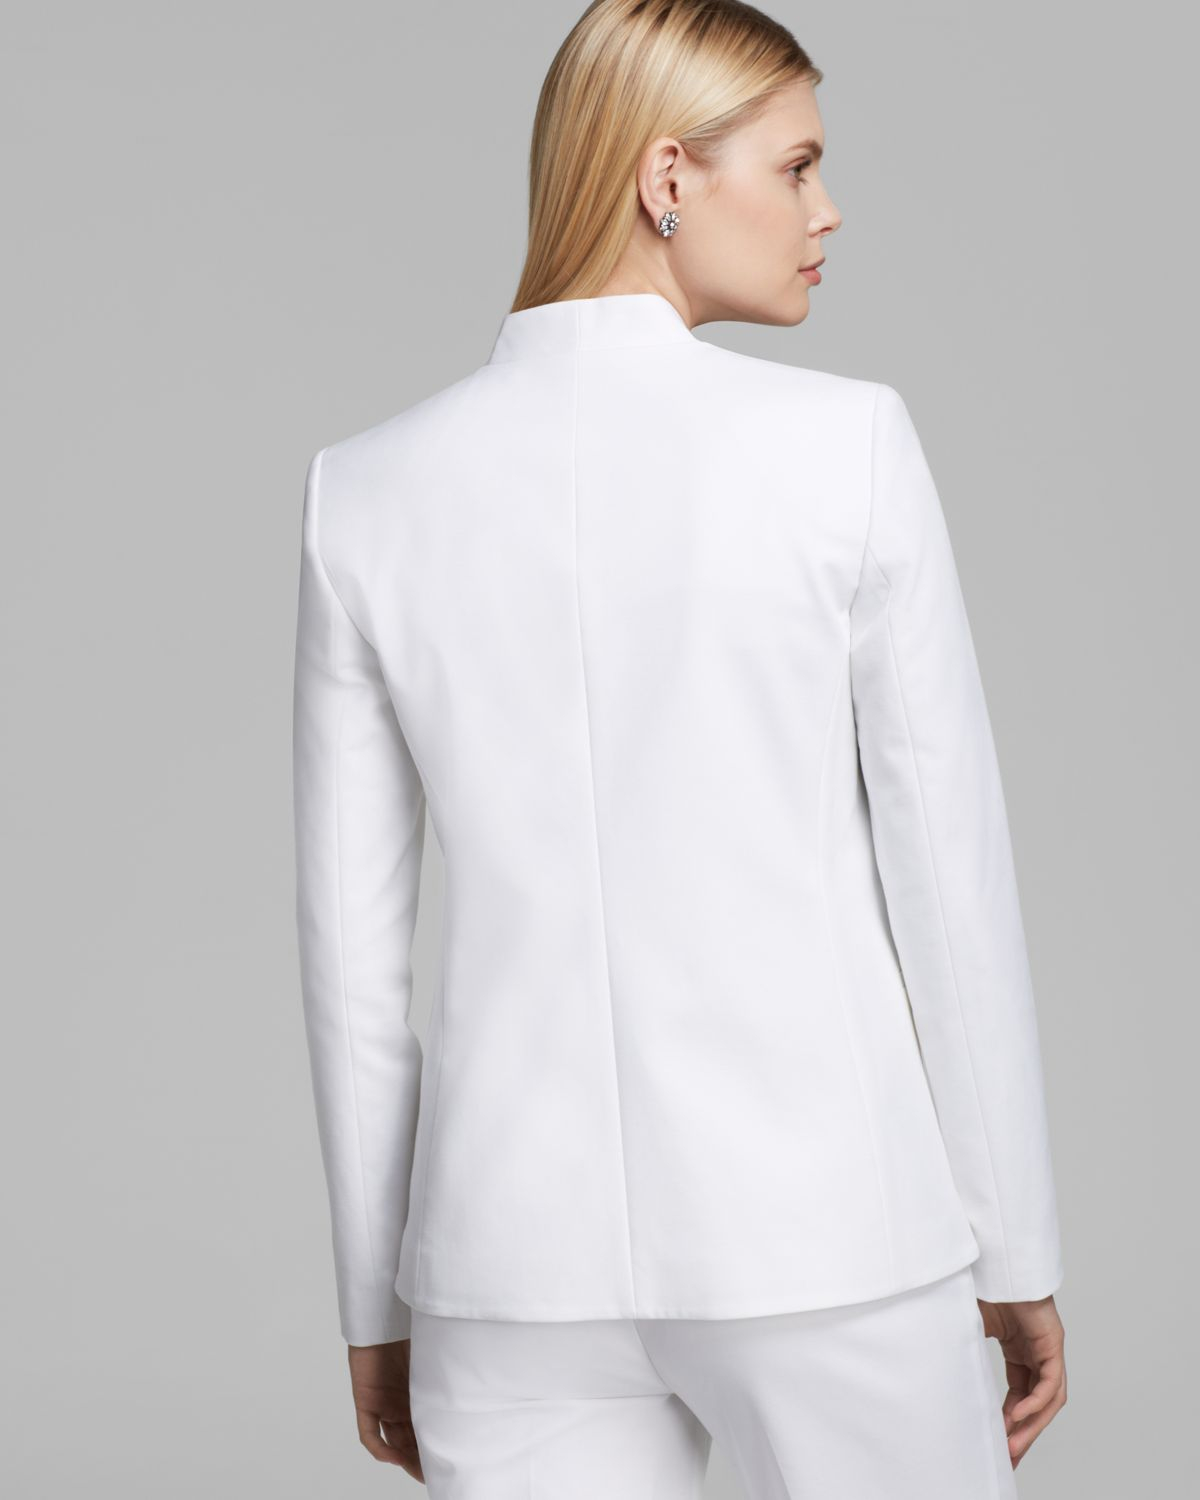 Lyst - T Tahari Lisbon Collarless Jacket in White